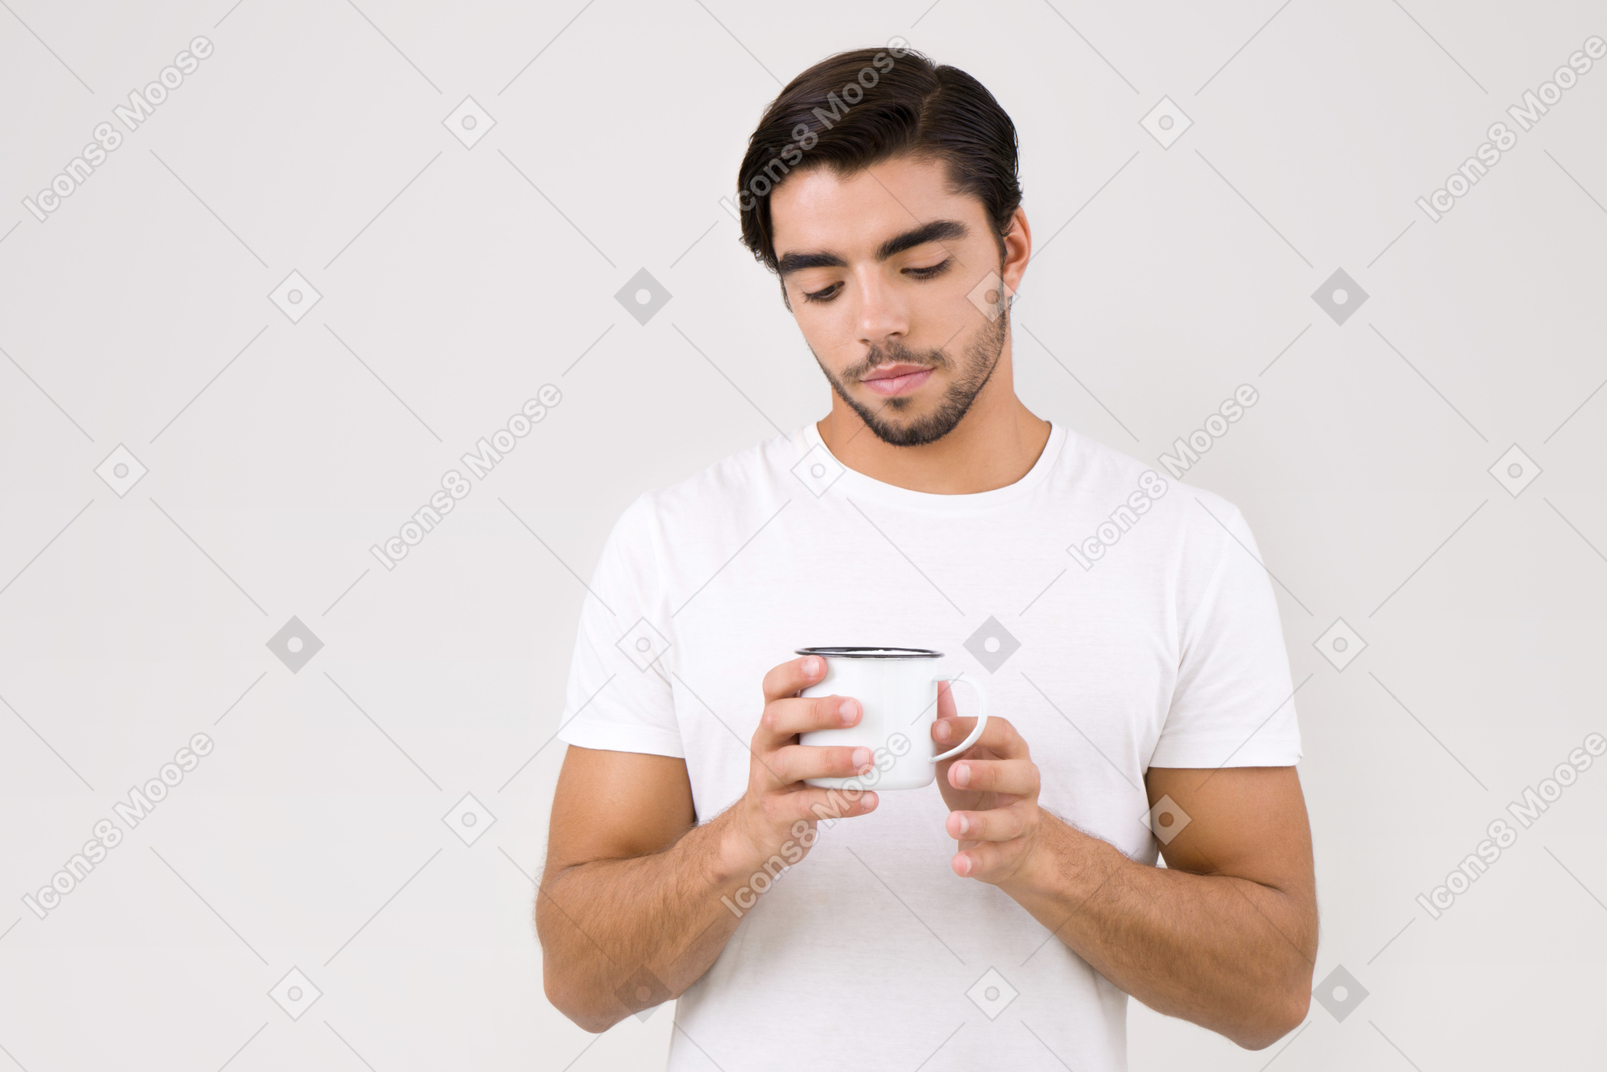 Handsome young man holding an enamel mug